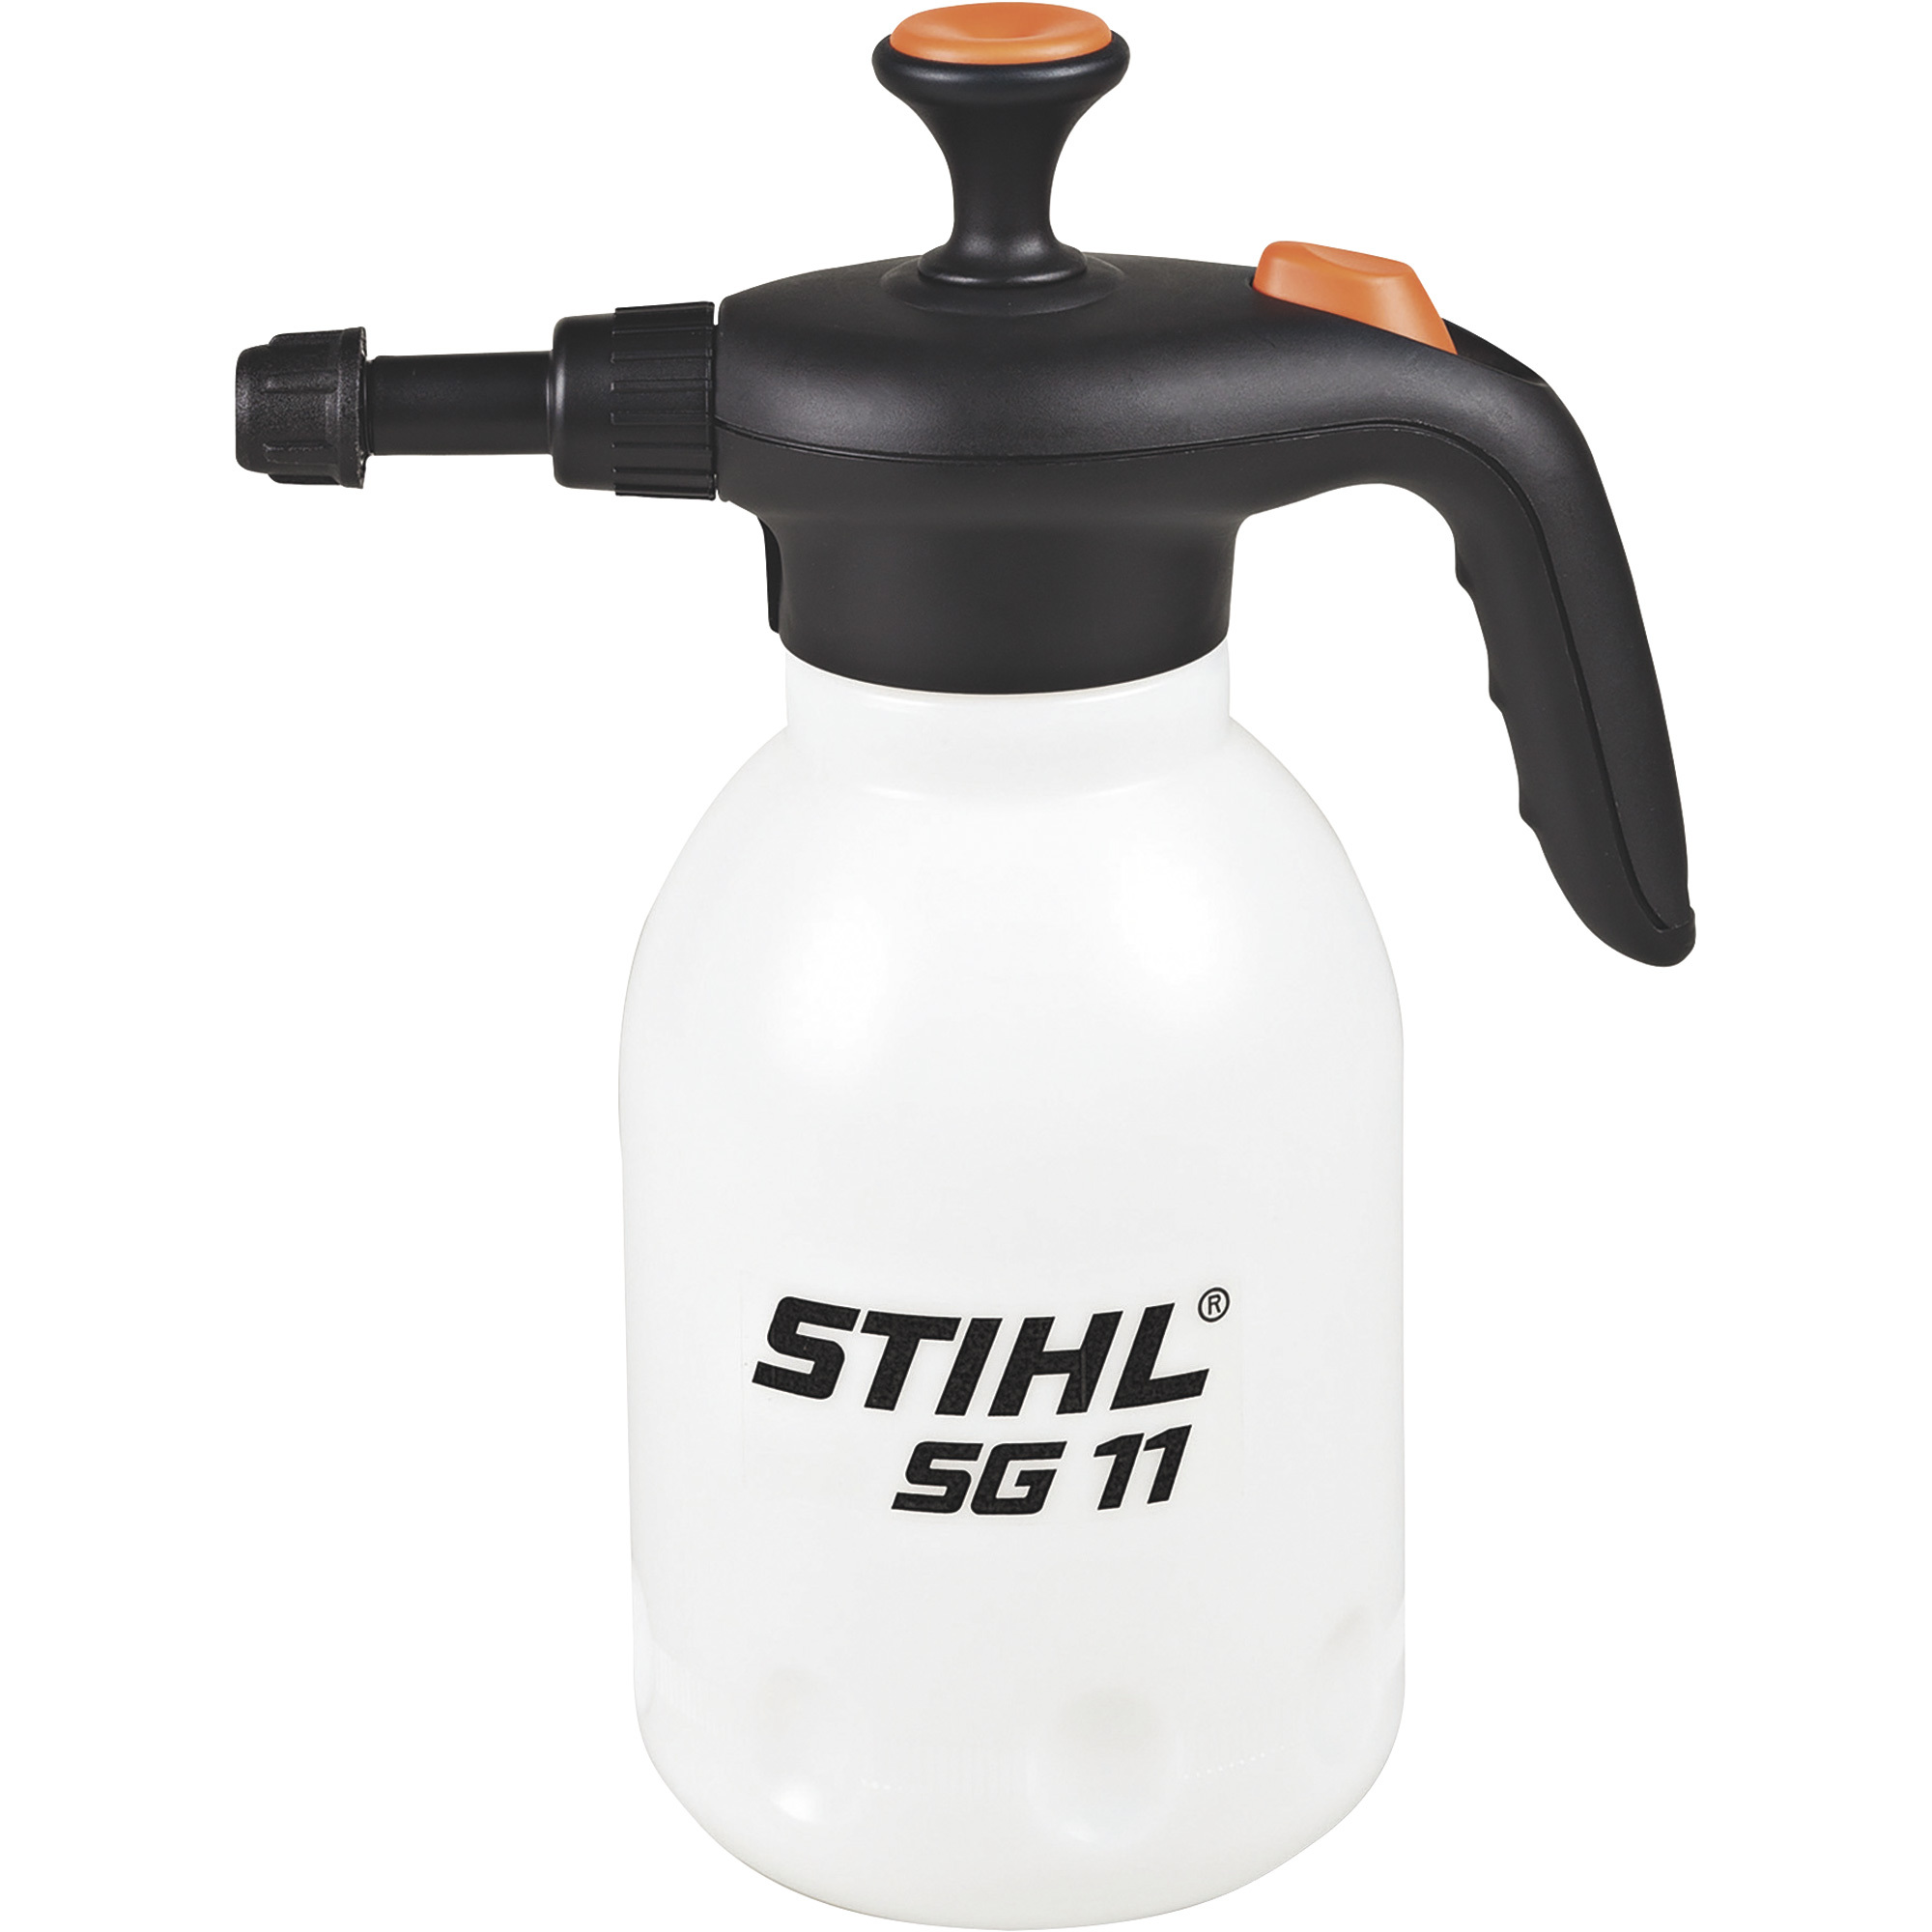 Stihl Handheld Manual Sprayer â 1.5-Liter (0.4-Gallon) Capacity, Model SG 11